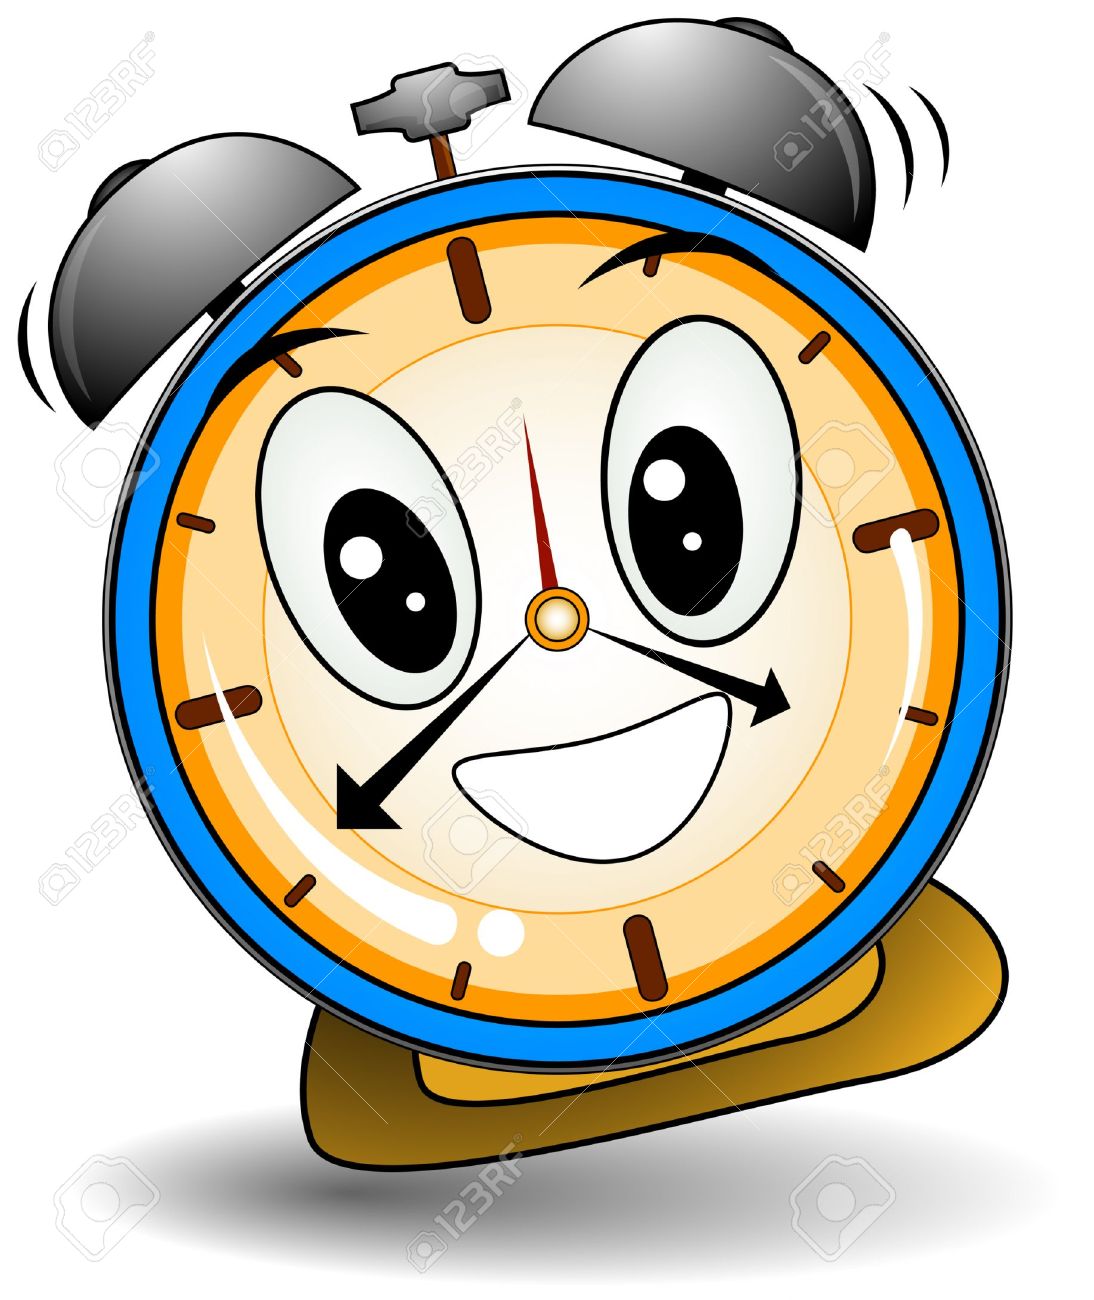 clipart clock animated - photo #18